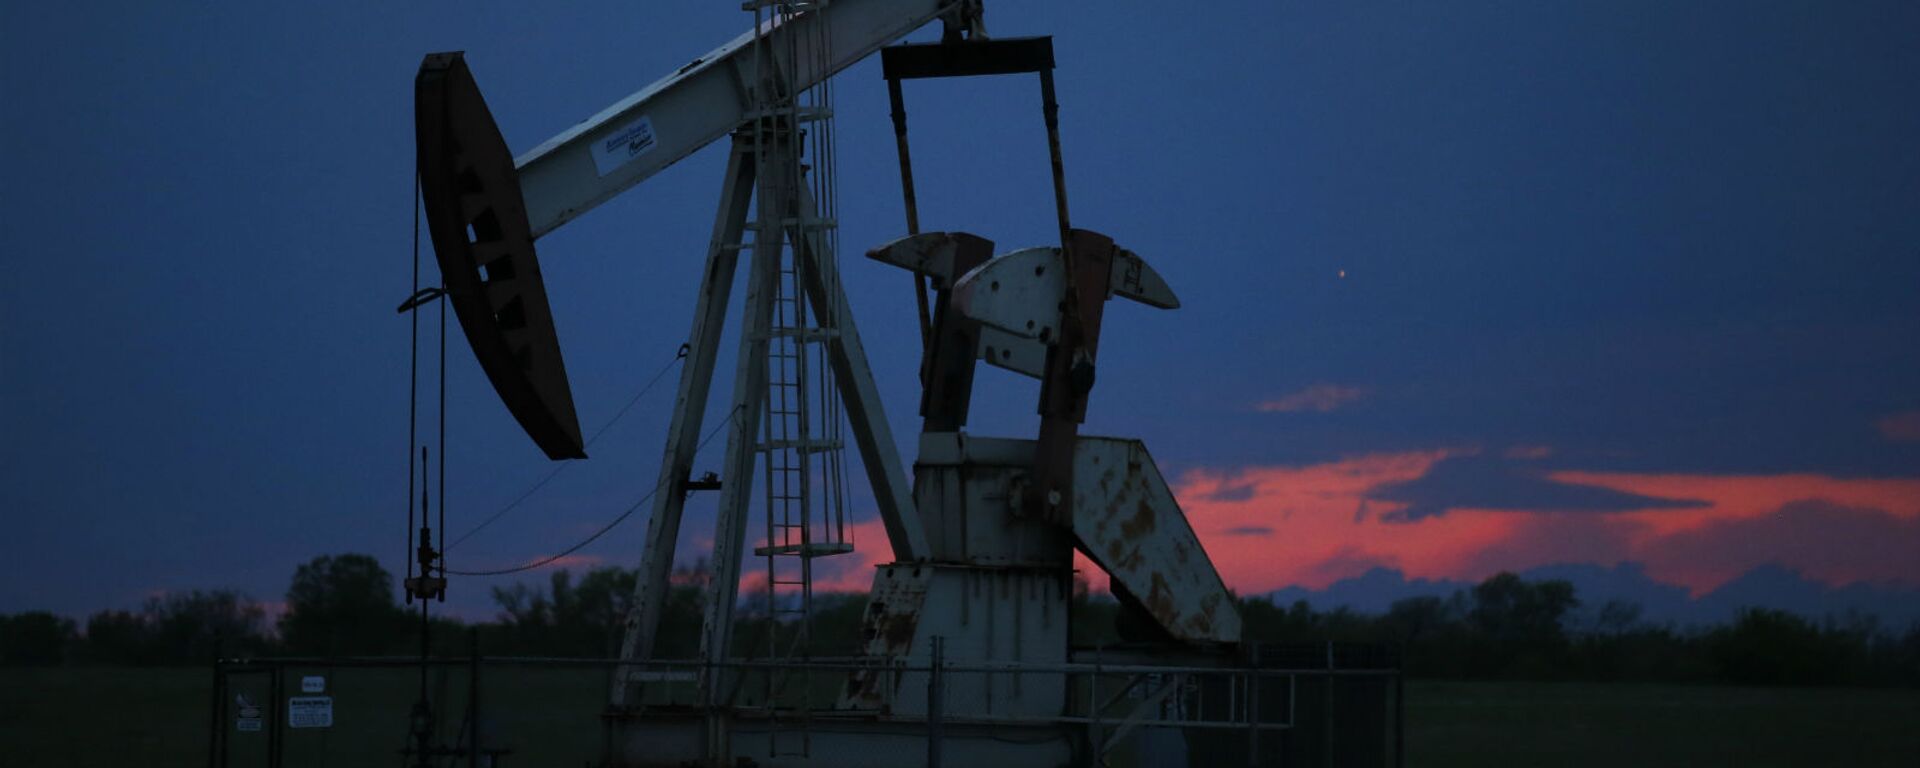 Нефтяная качалка в Оклахома-Сити - Sputnik Армения, 1920, 30.04.2021